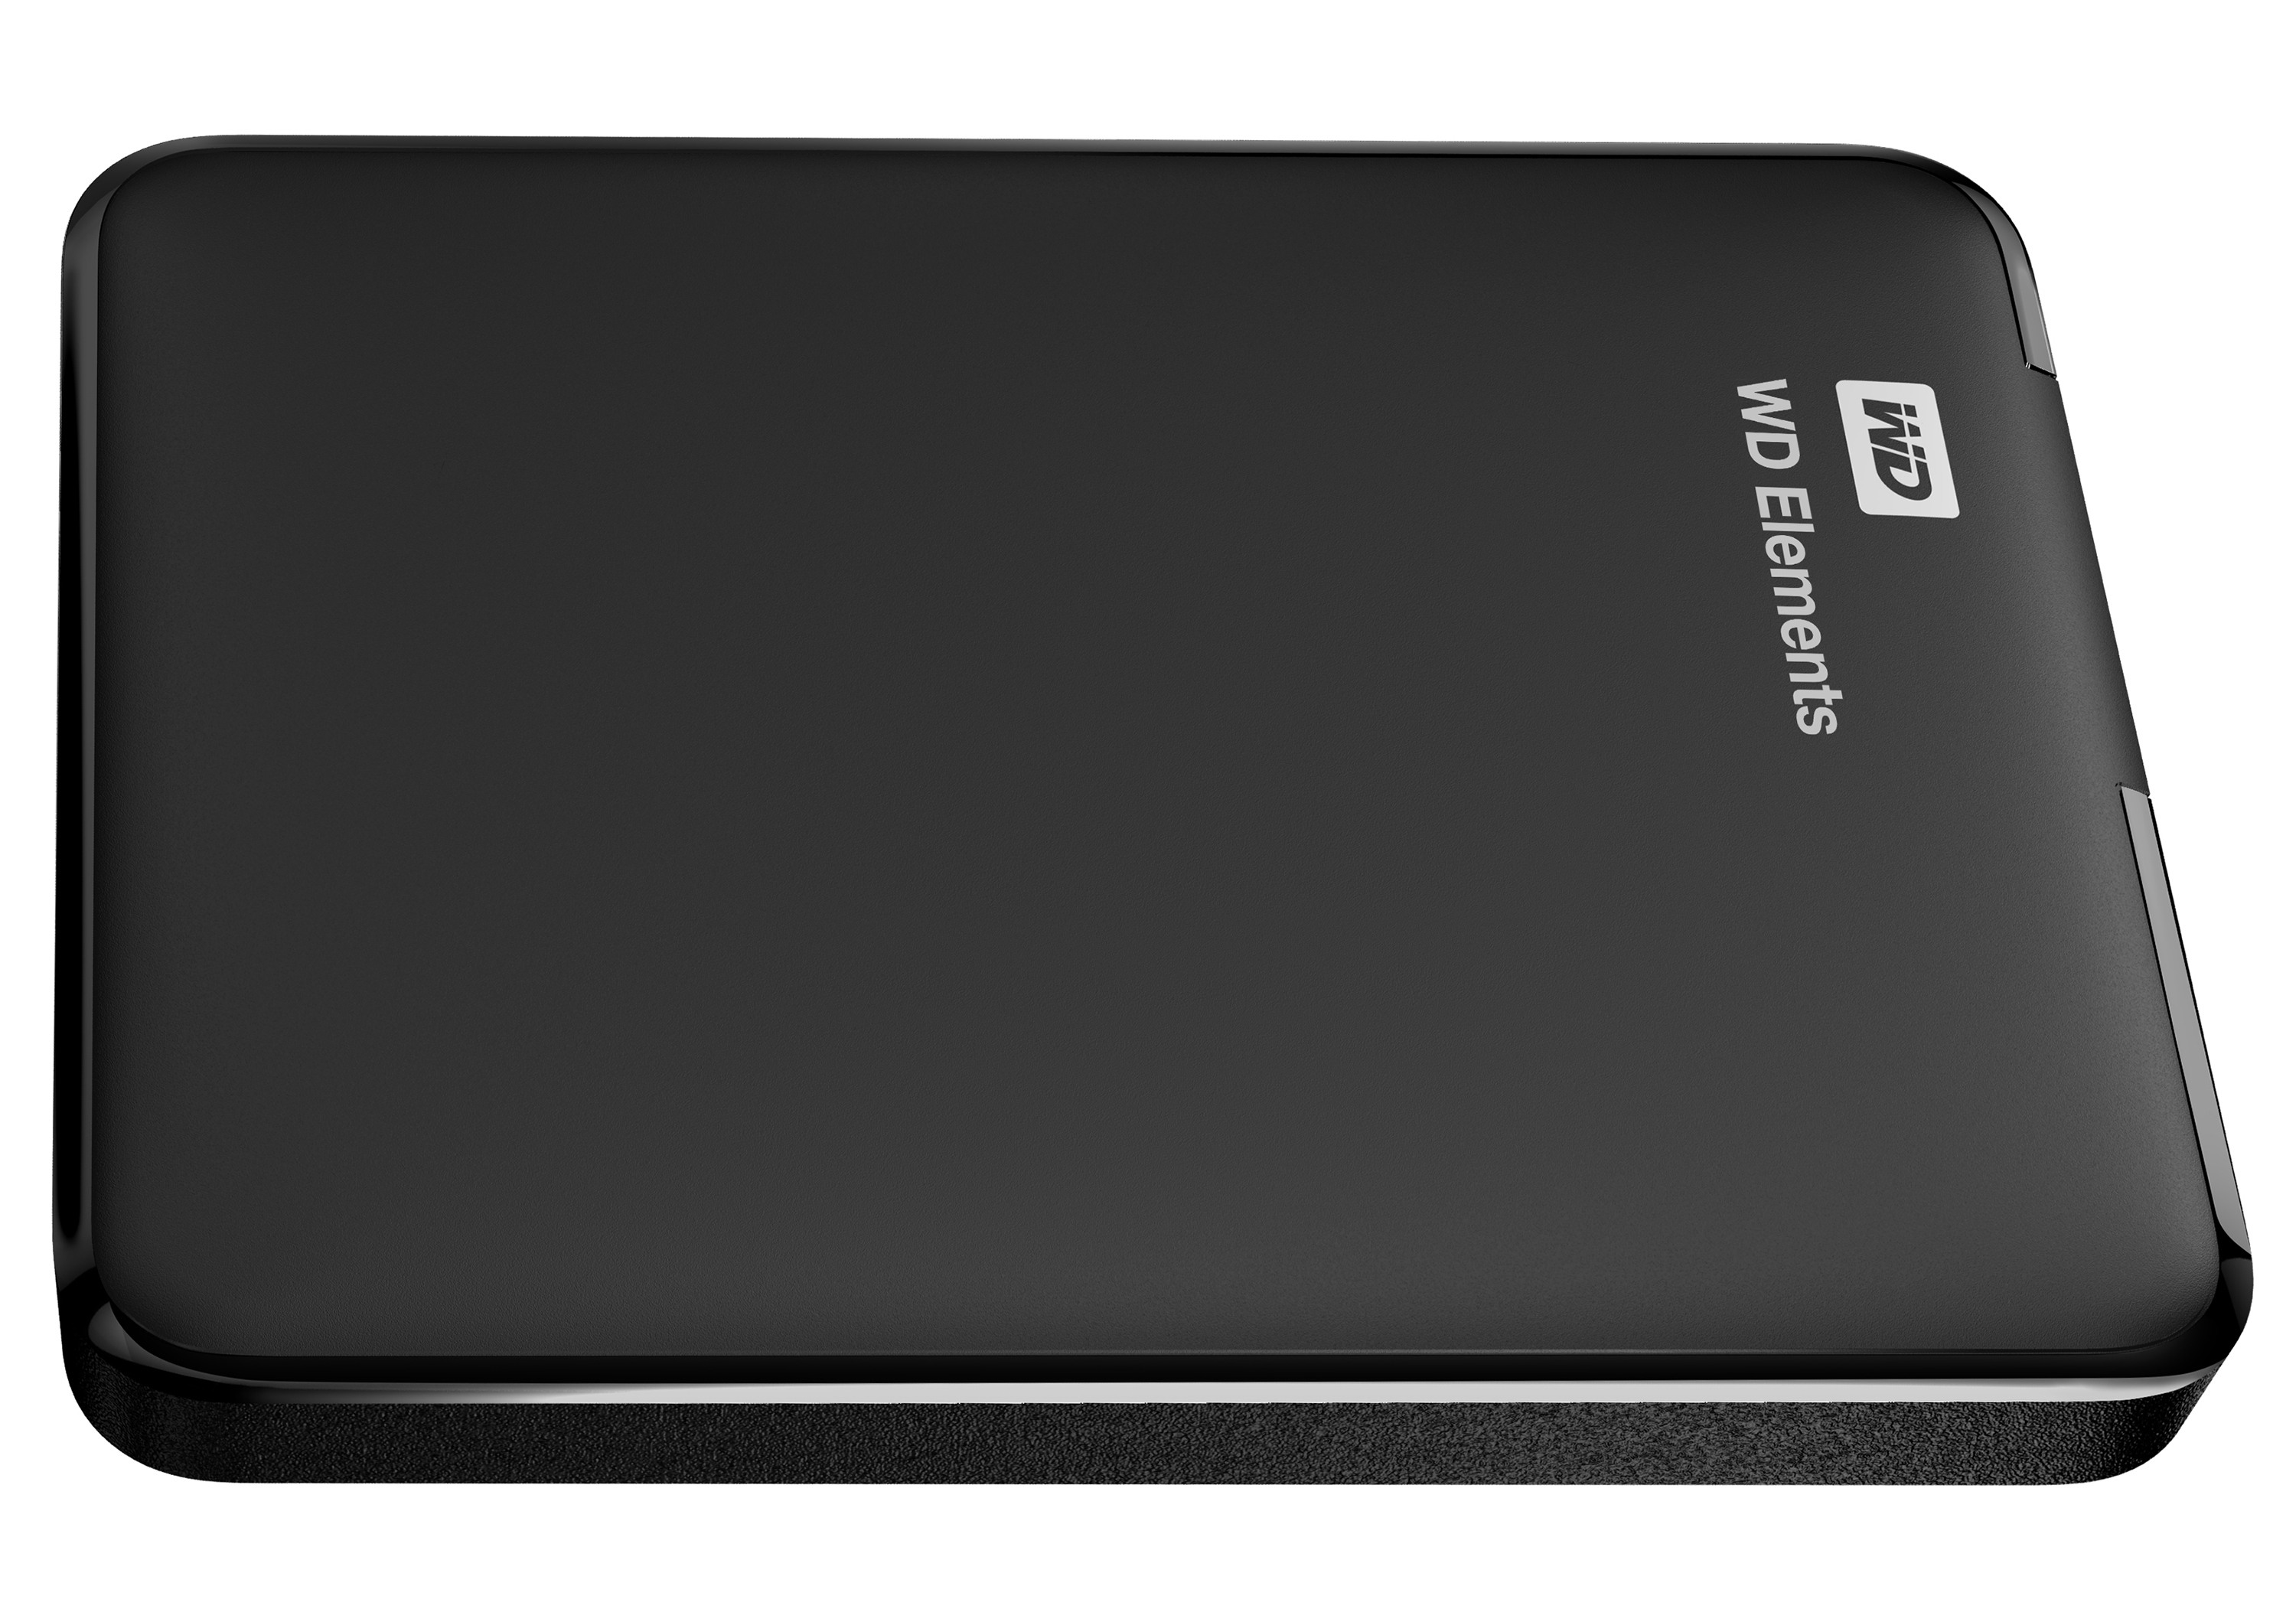 HD EXT 2,5 2TB WD ELEMENTS USB3 NEW NERO PORTABLE